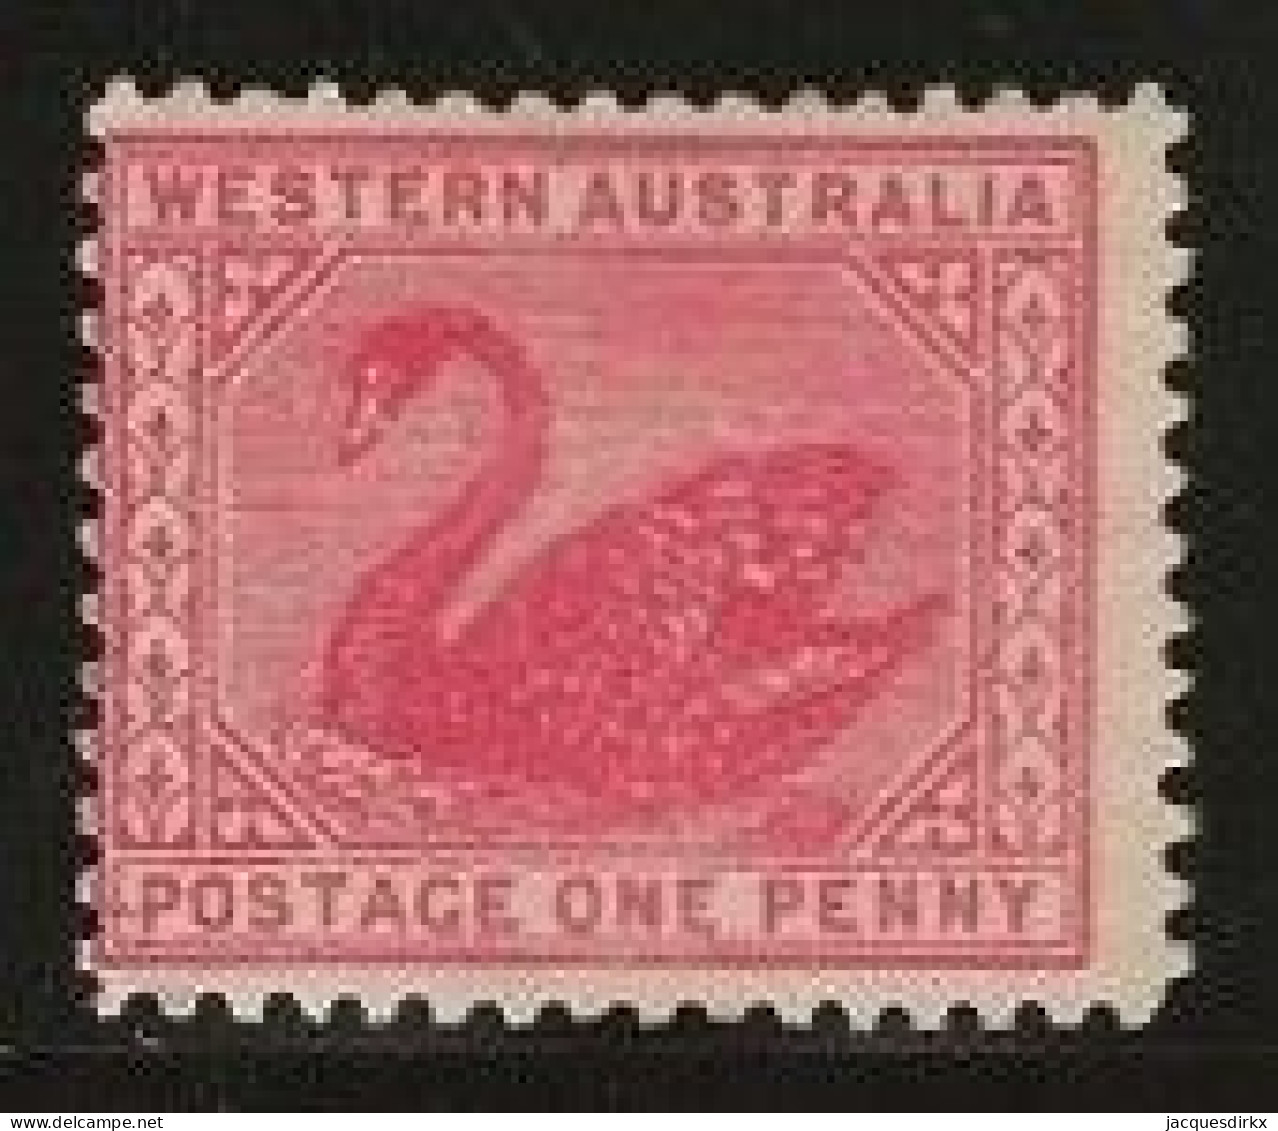 Western Australia     .   SG    .    139b        .   *       .     Mint-hinged - Ongebruikt